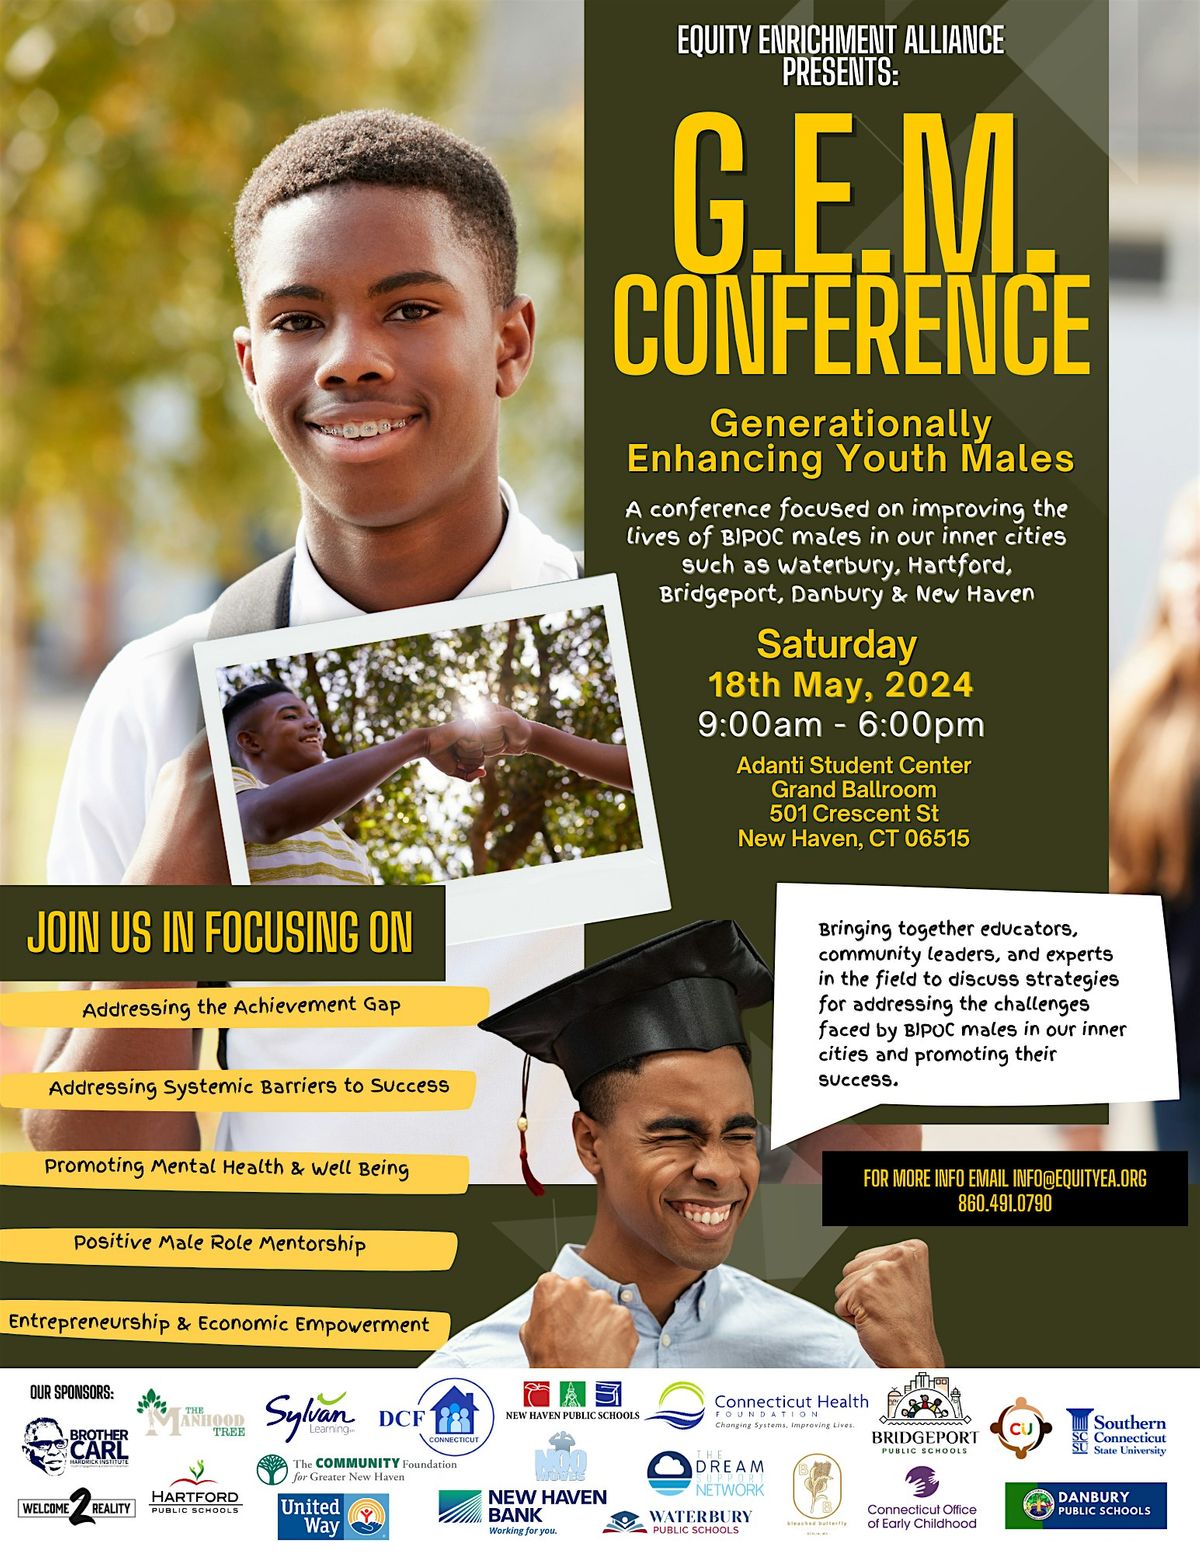 GEM Conference (Generationally Enhancing Males)